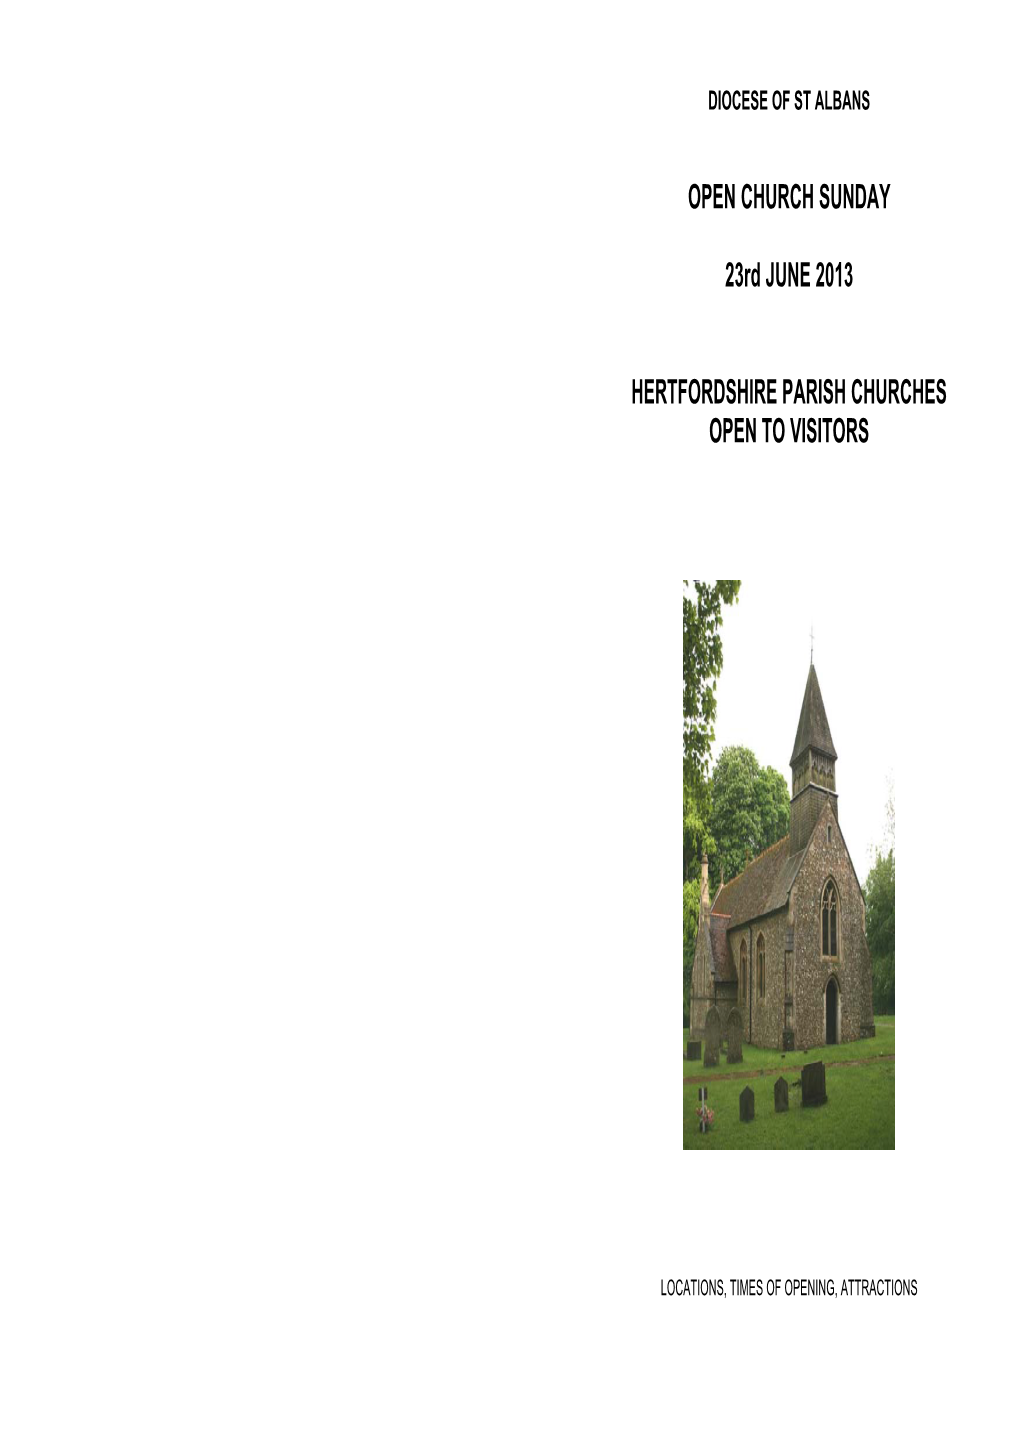 OPEN CHURCH SUNDAY 23Rd JUNE 2013 HERTFORDSHIRE PARISH CHURCHES OPEN to VISITORS